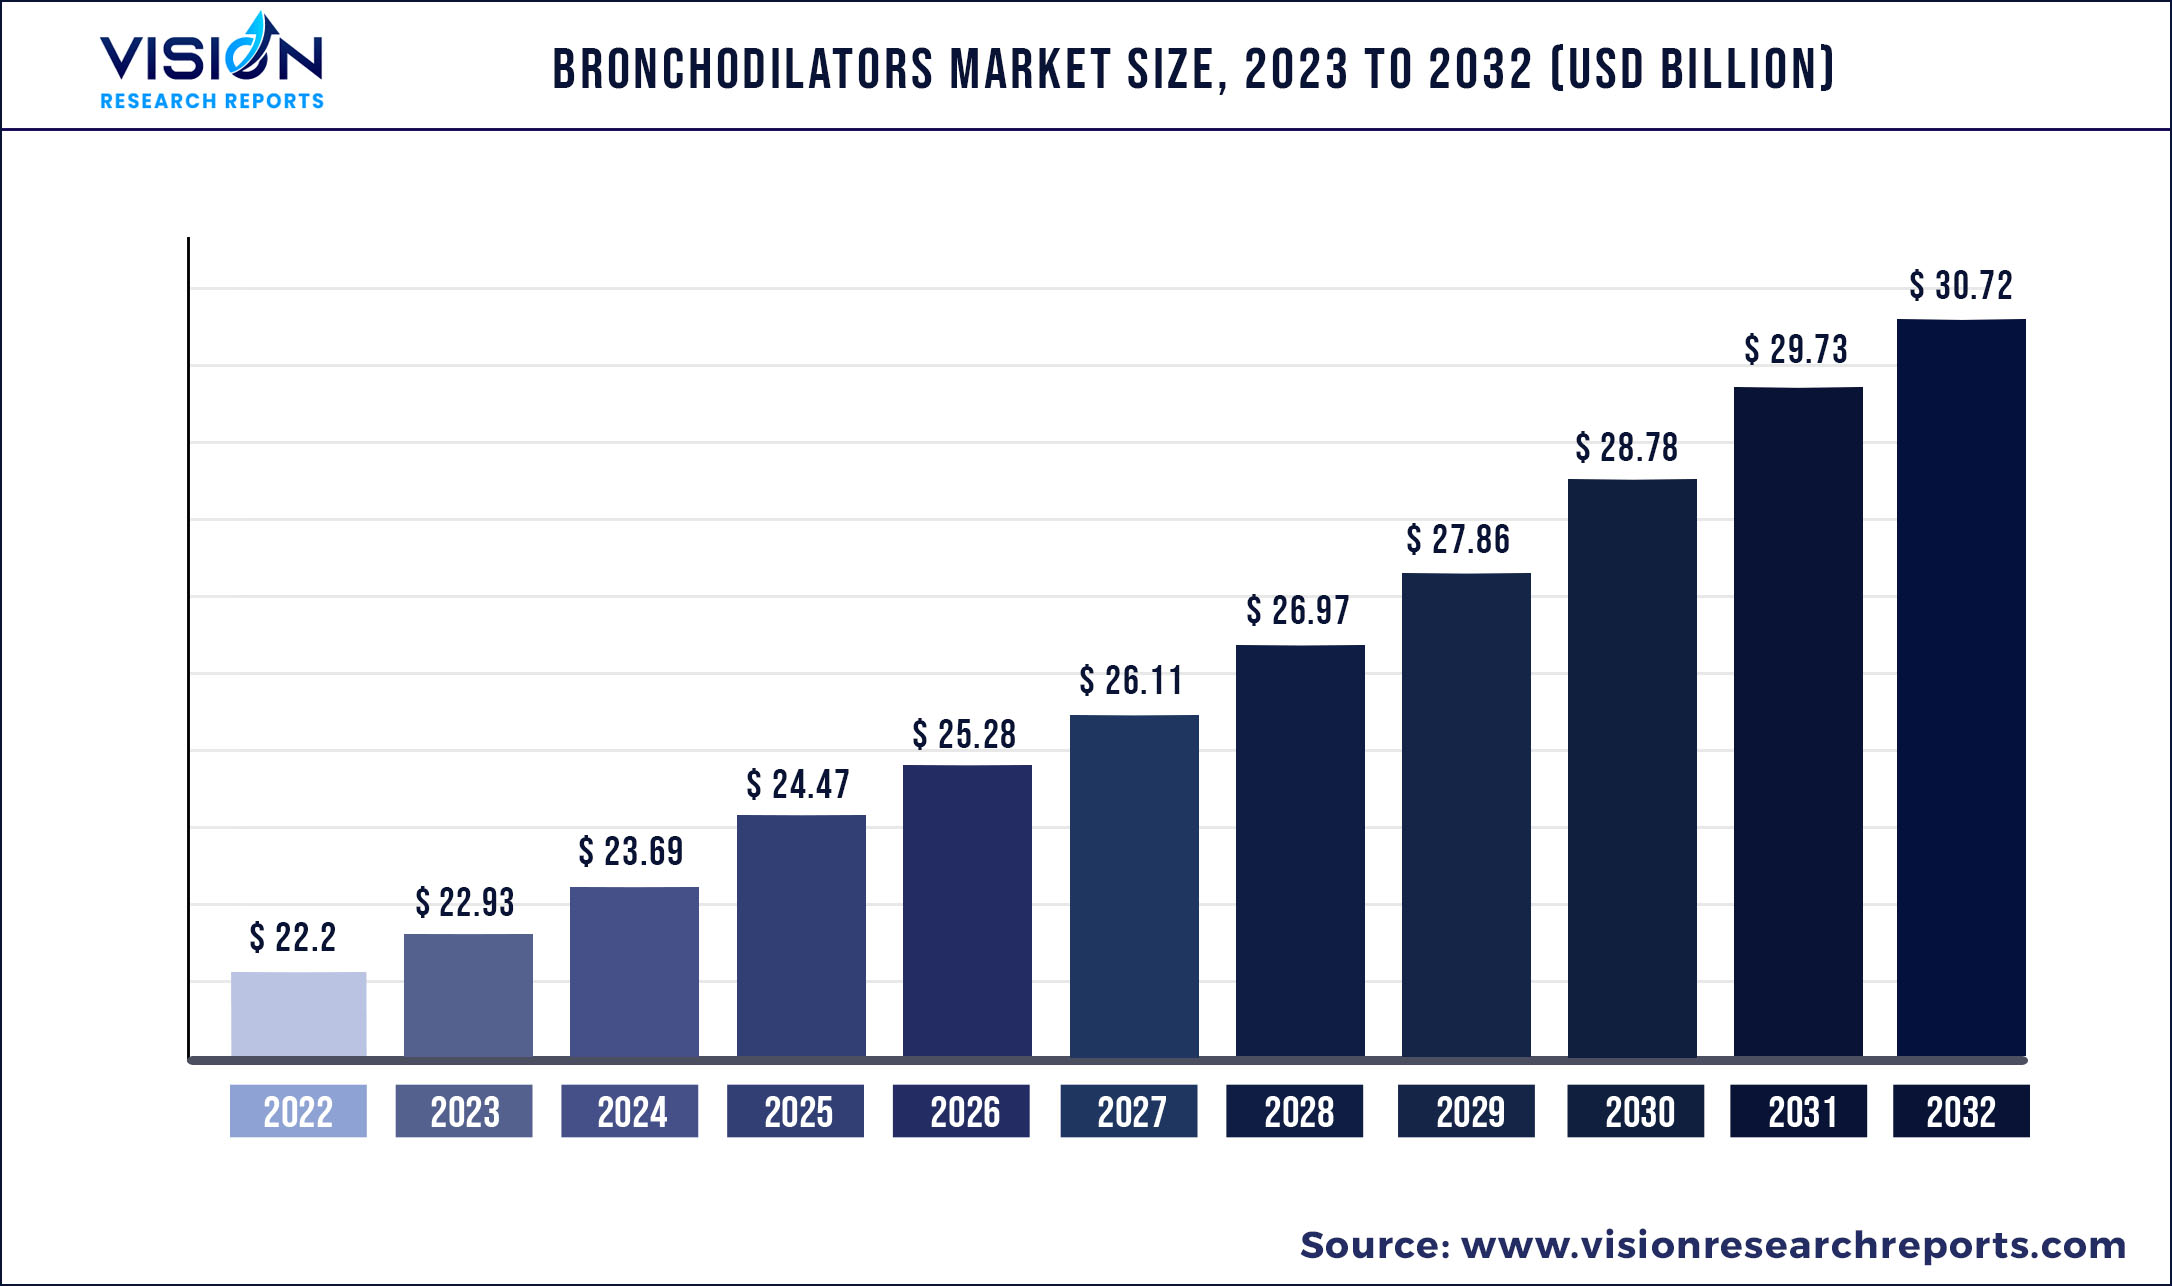 Bronchodilators Market Size 2023 to 2032